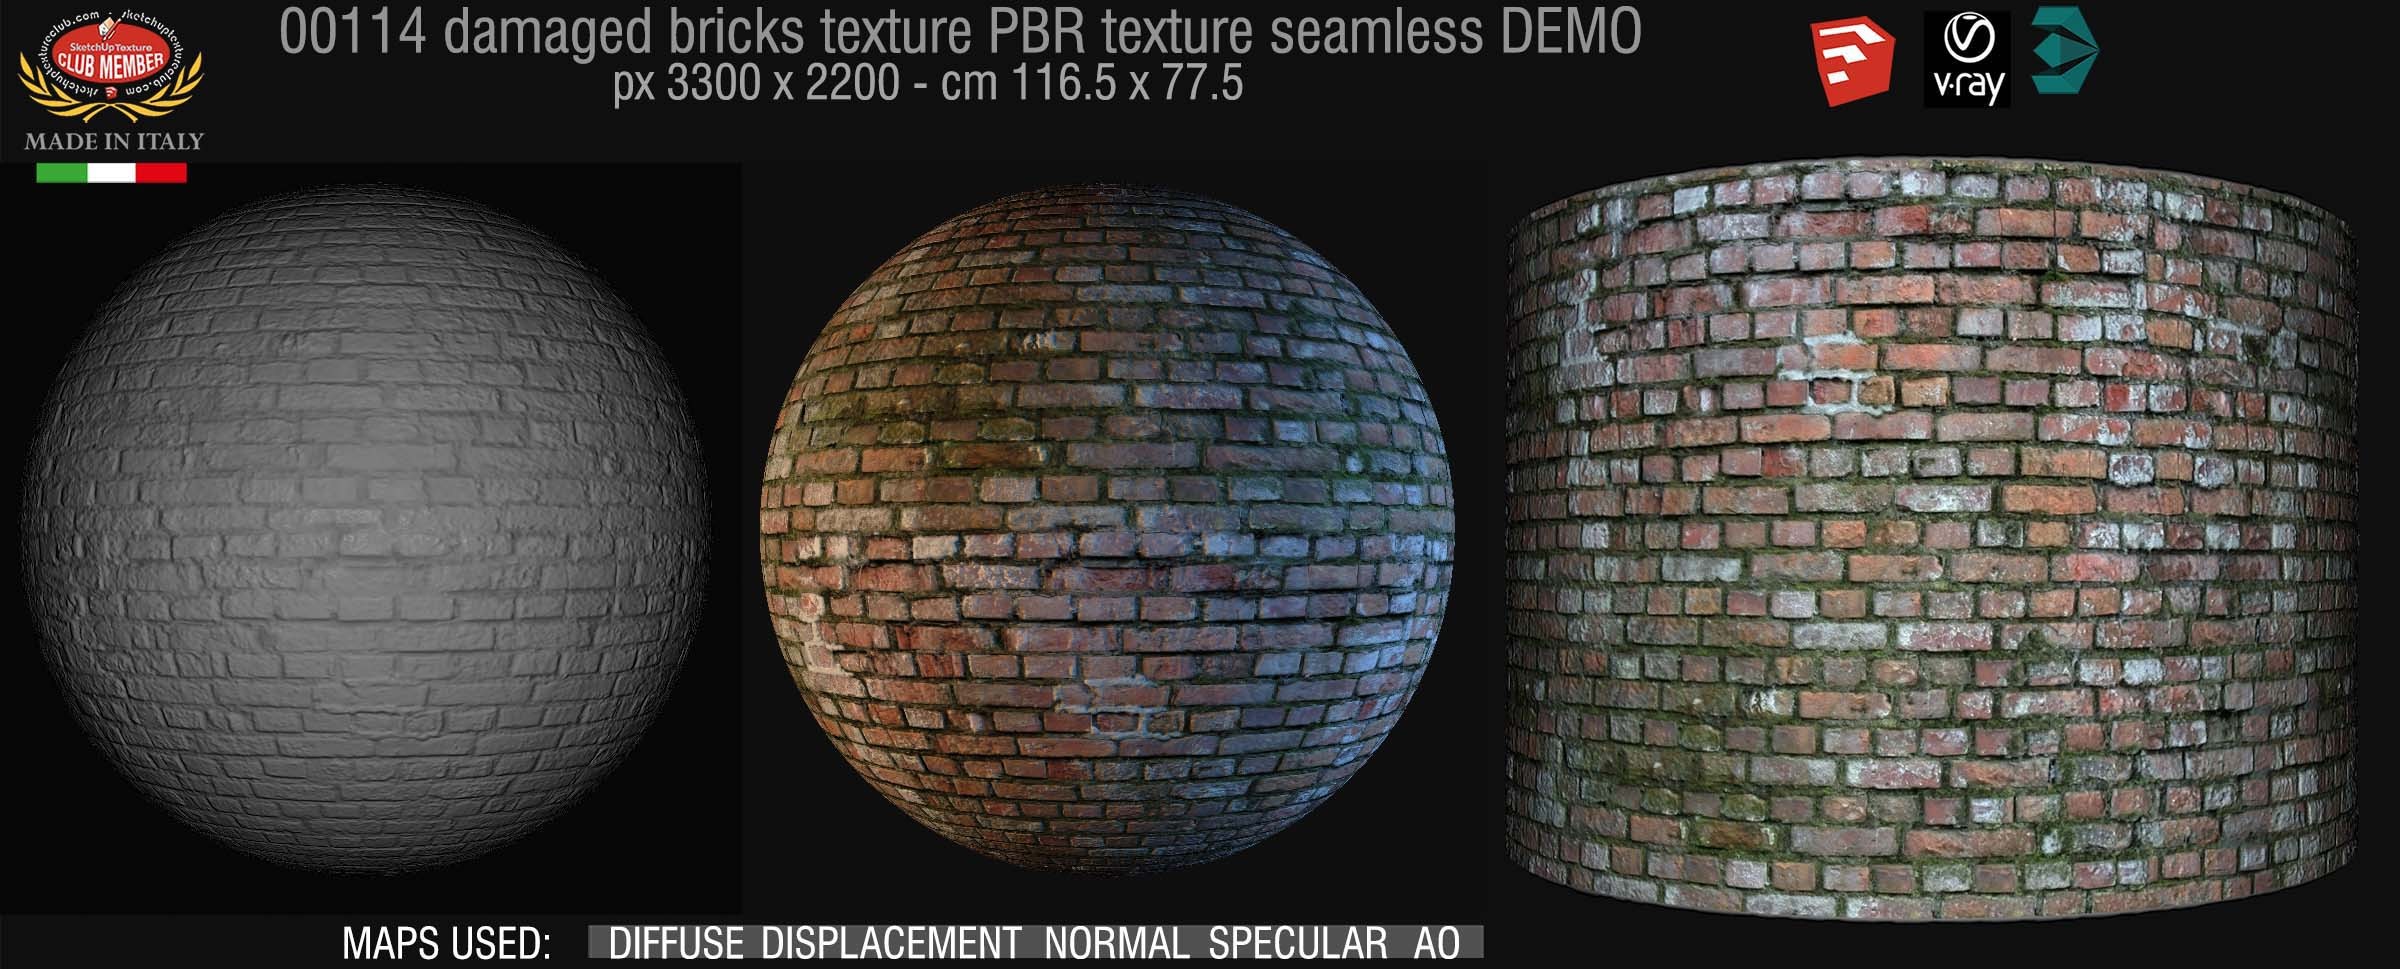 00114 Damaged bricks PBR texture seamless DEMO